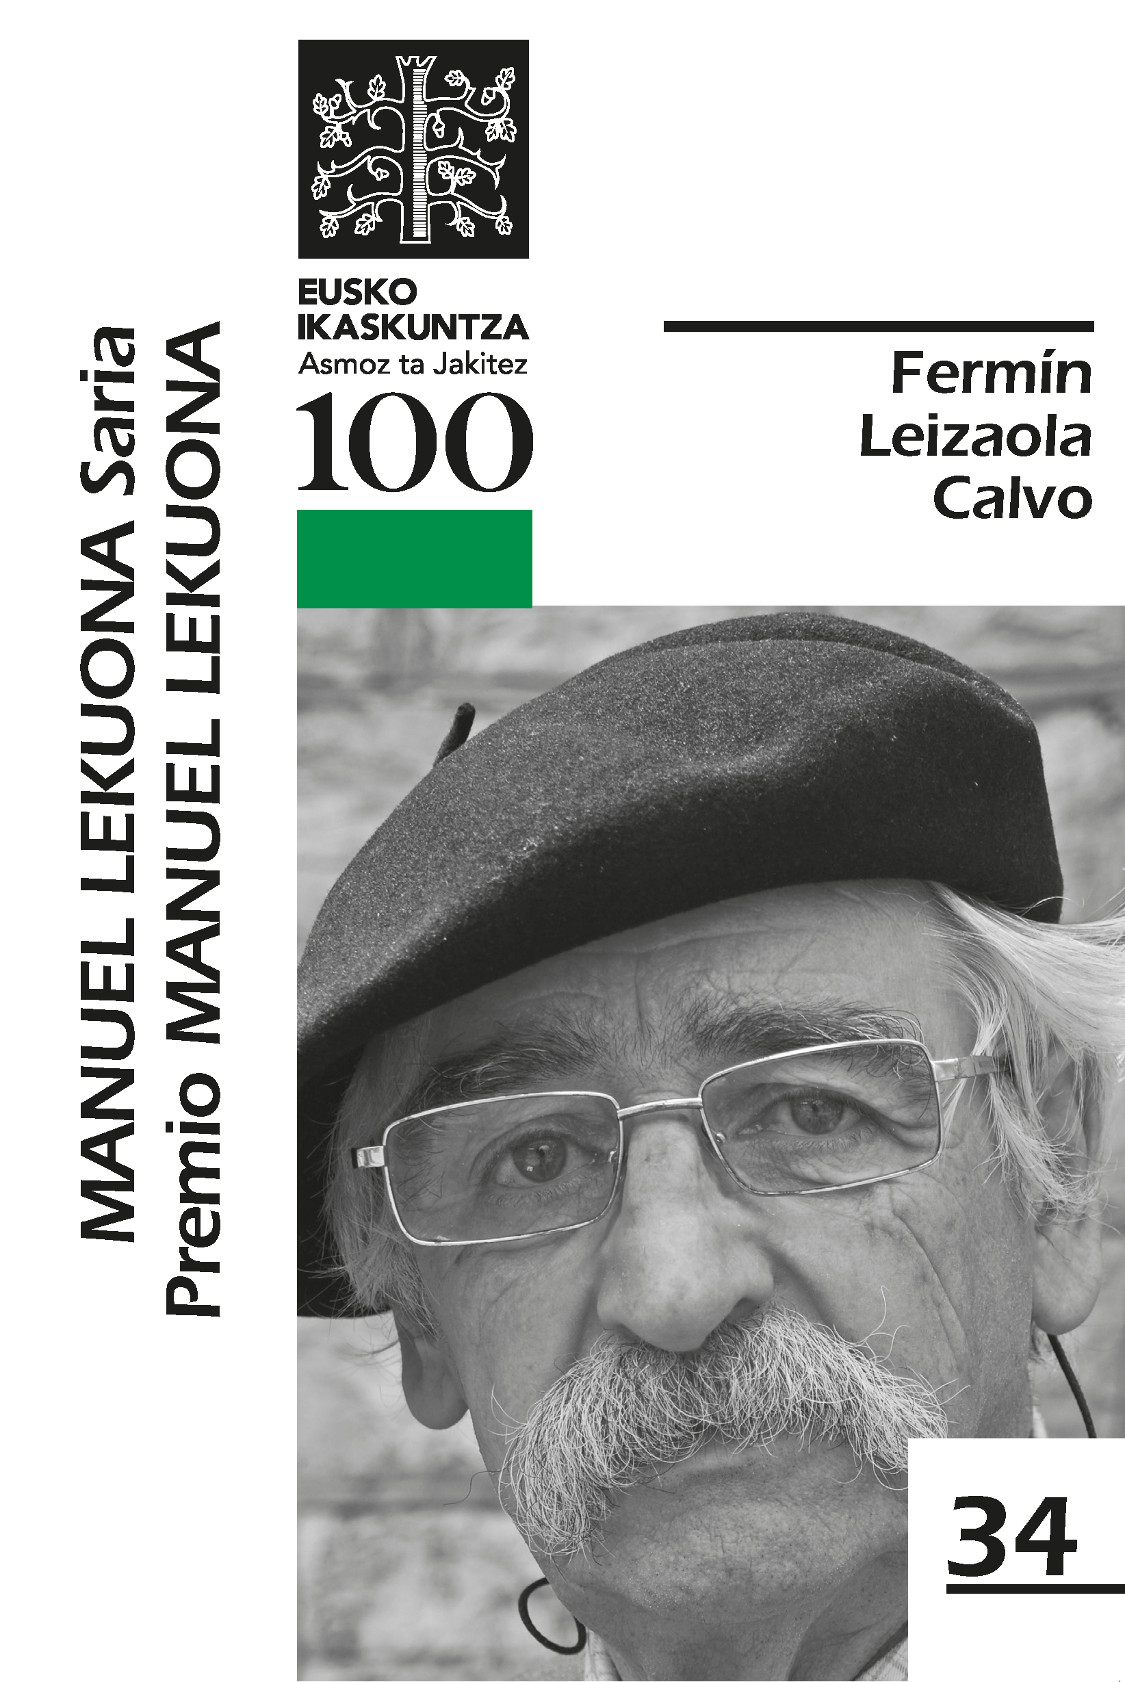 Fermín Leizaola Calvo